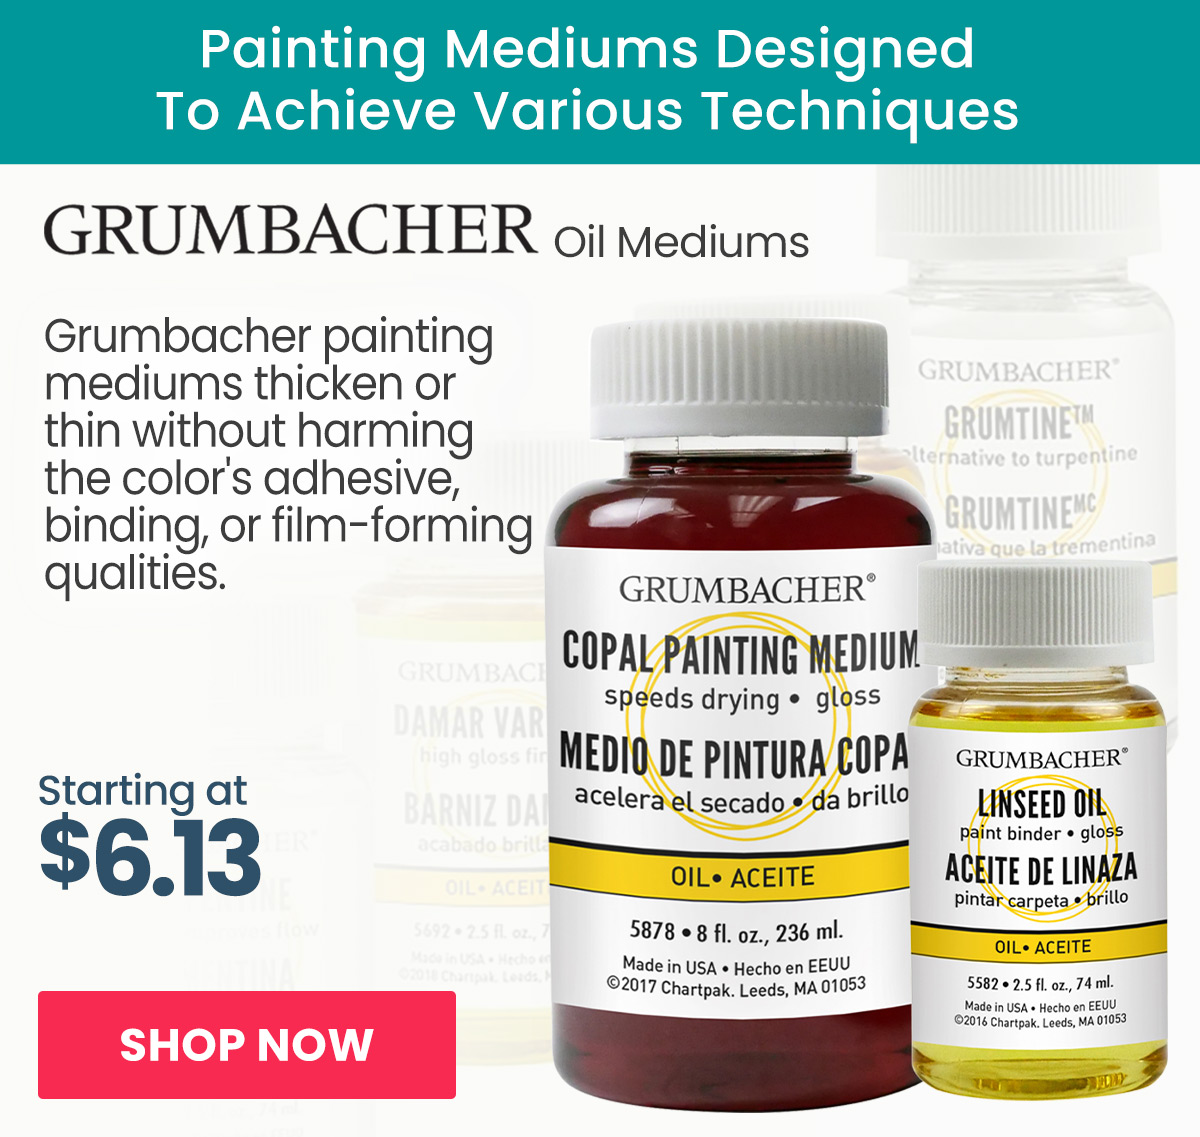 Grumbacher Professional Oil Mediums